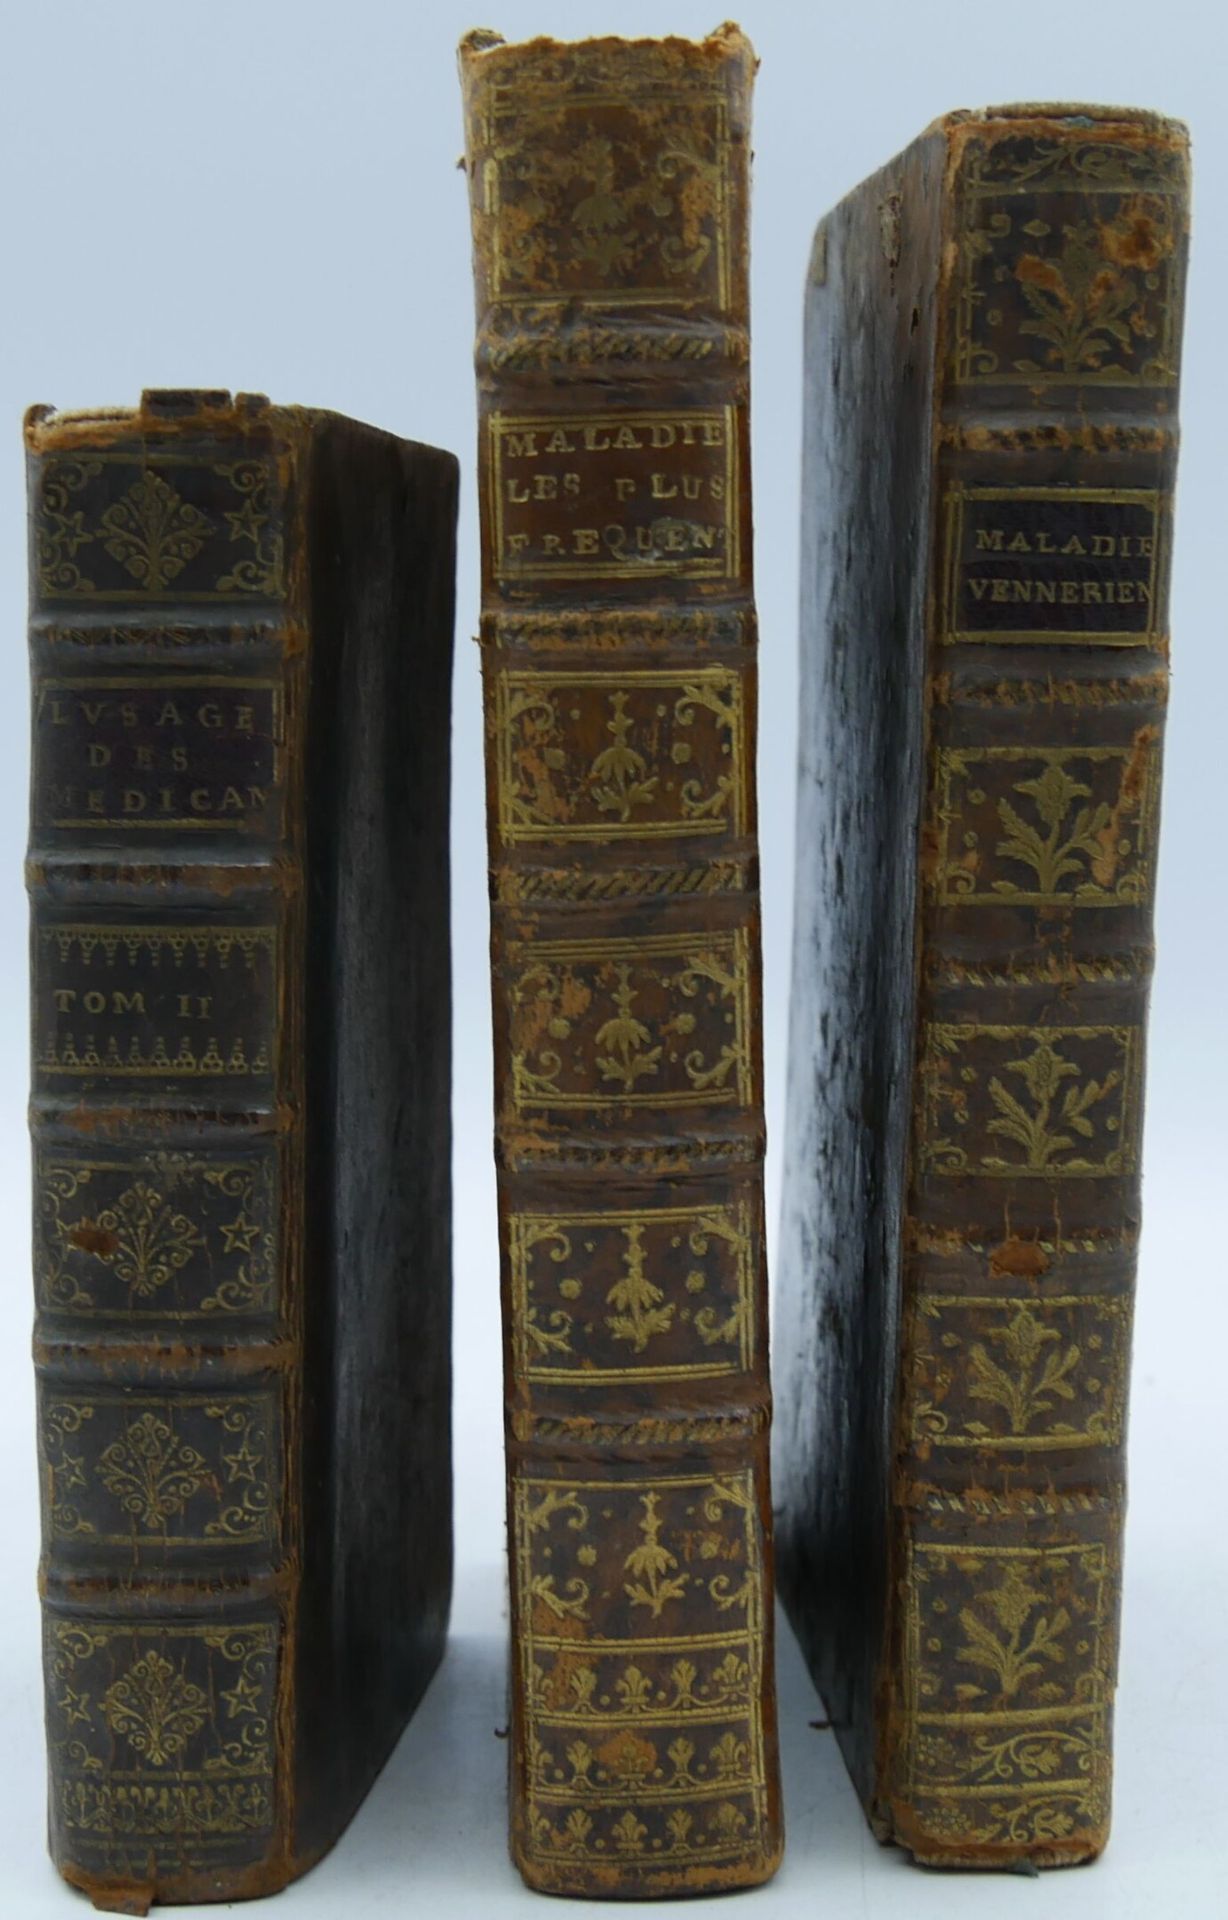 Null MEDICINE]. Set of 3 Volumes. Antique bindings.

1 Volume : Guide or Manual &hellip;